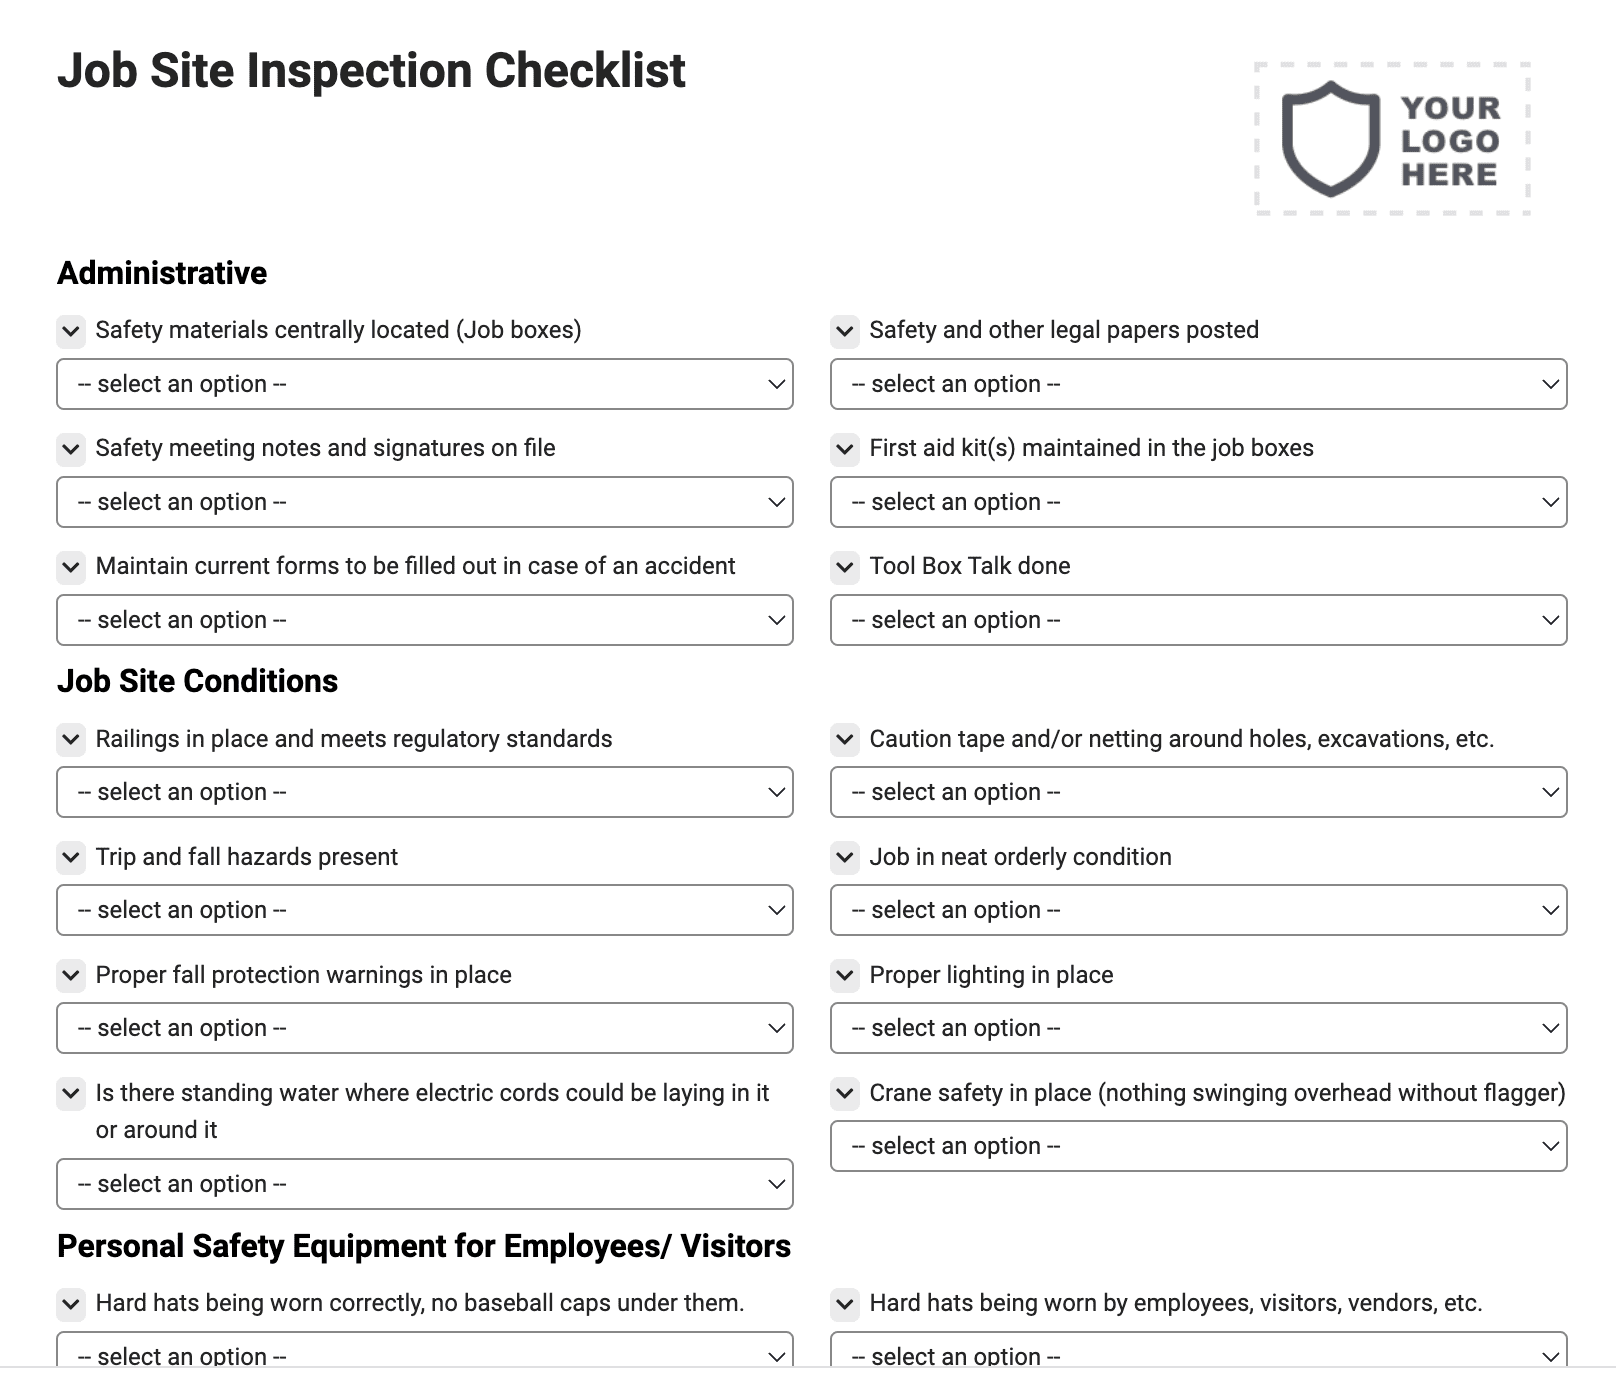 Job Site Inspection Checklist